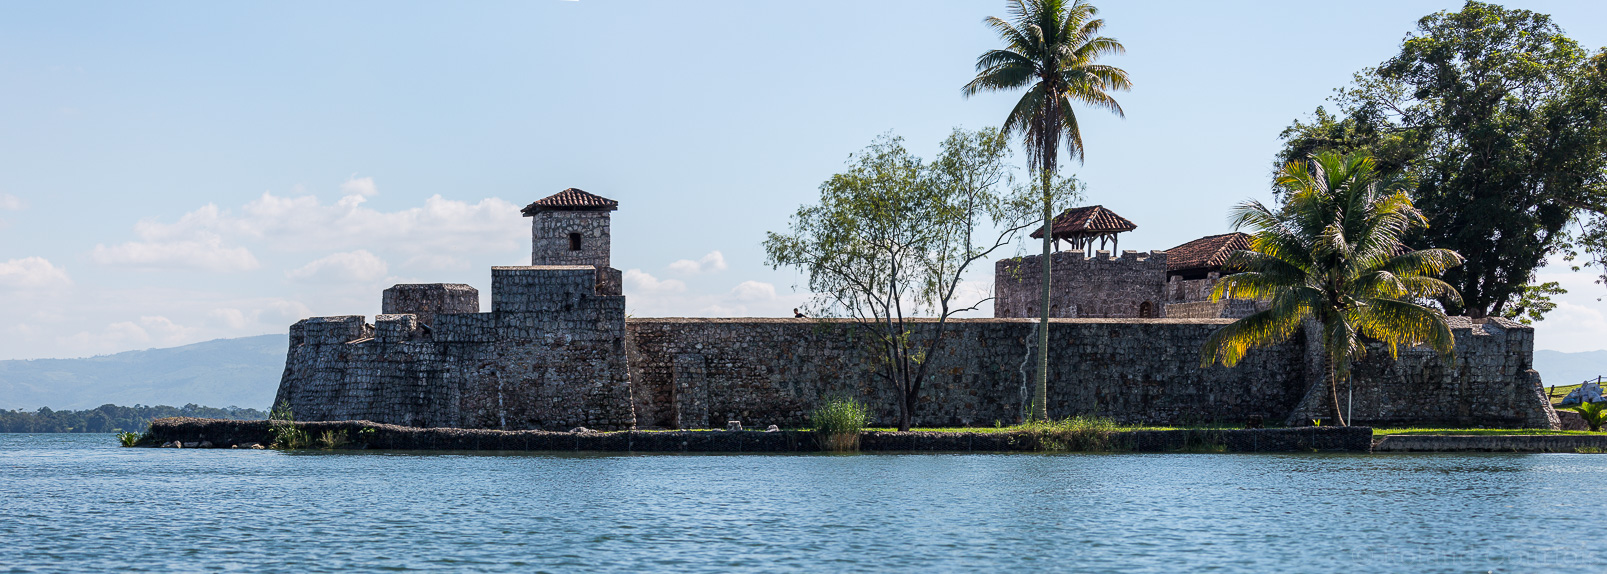 Castillo San Felipe, petit fort bâti au 17ème siècle .......